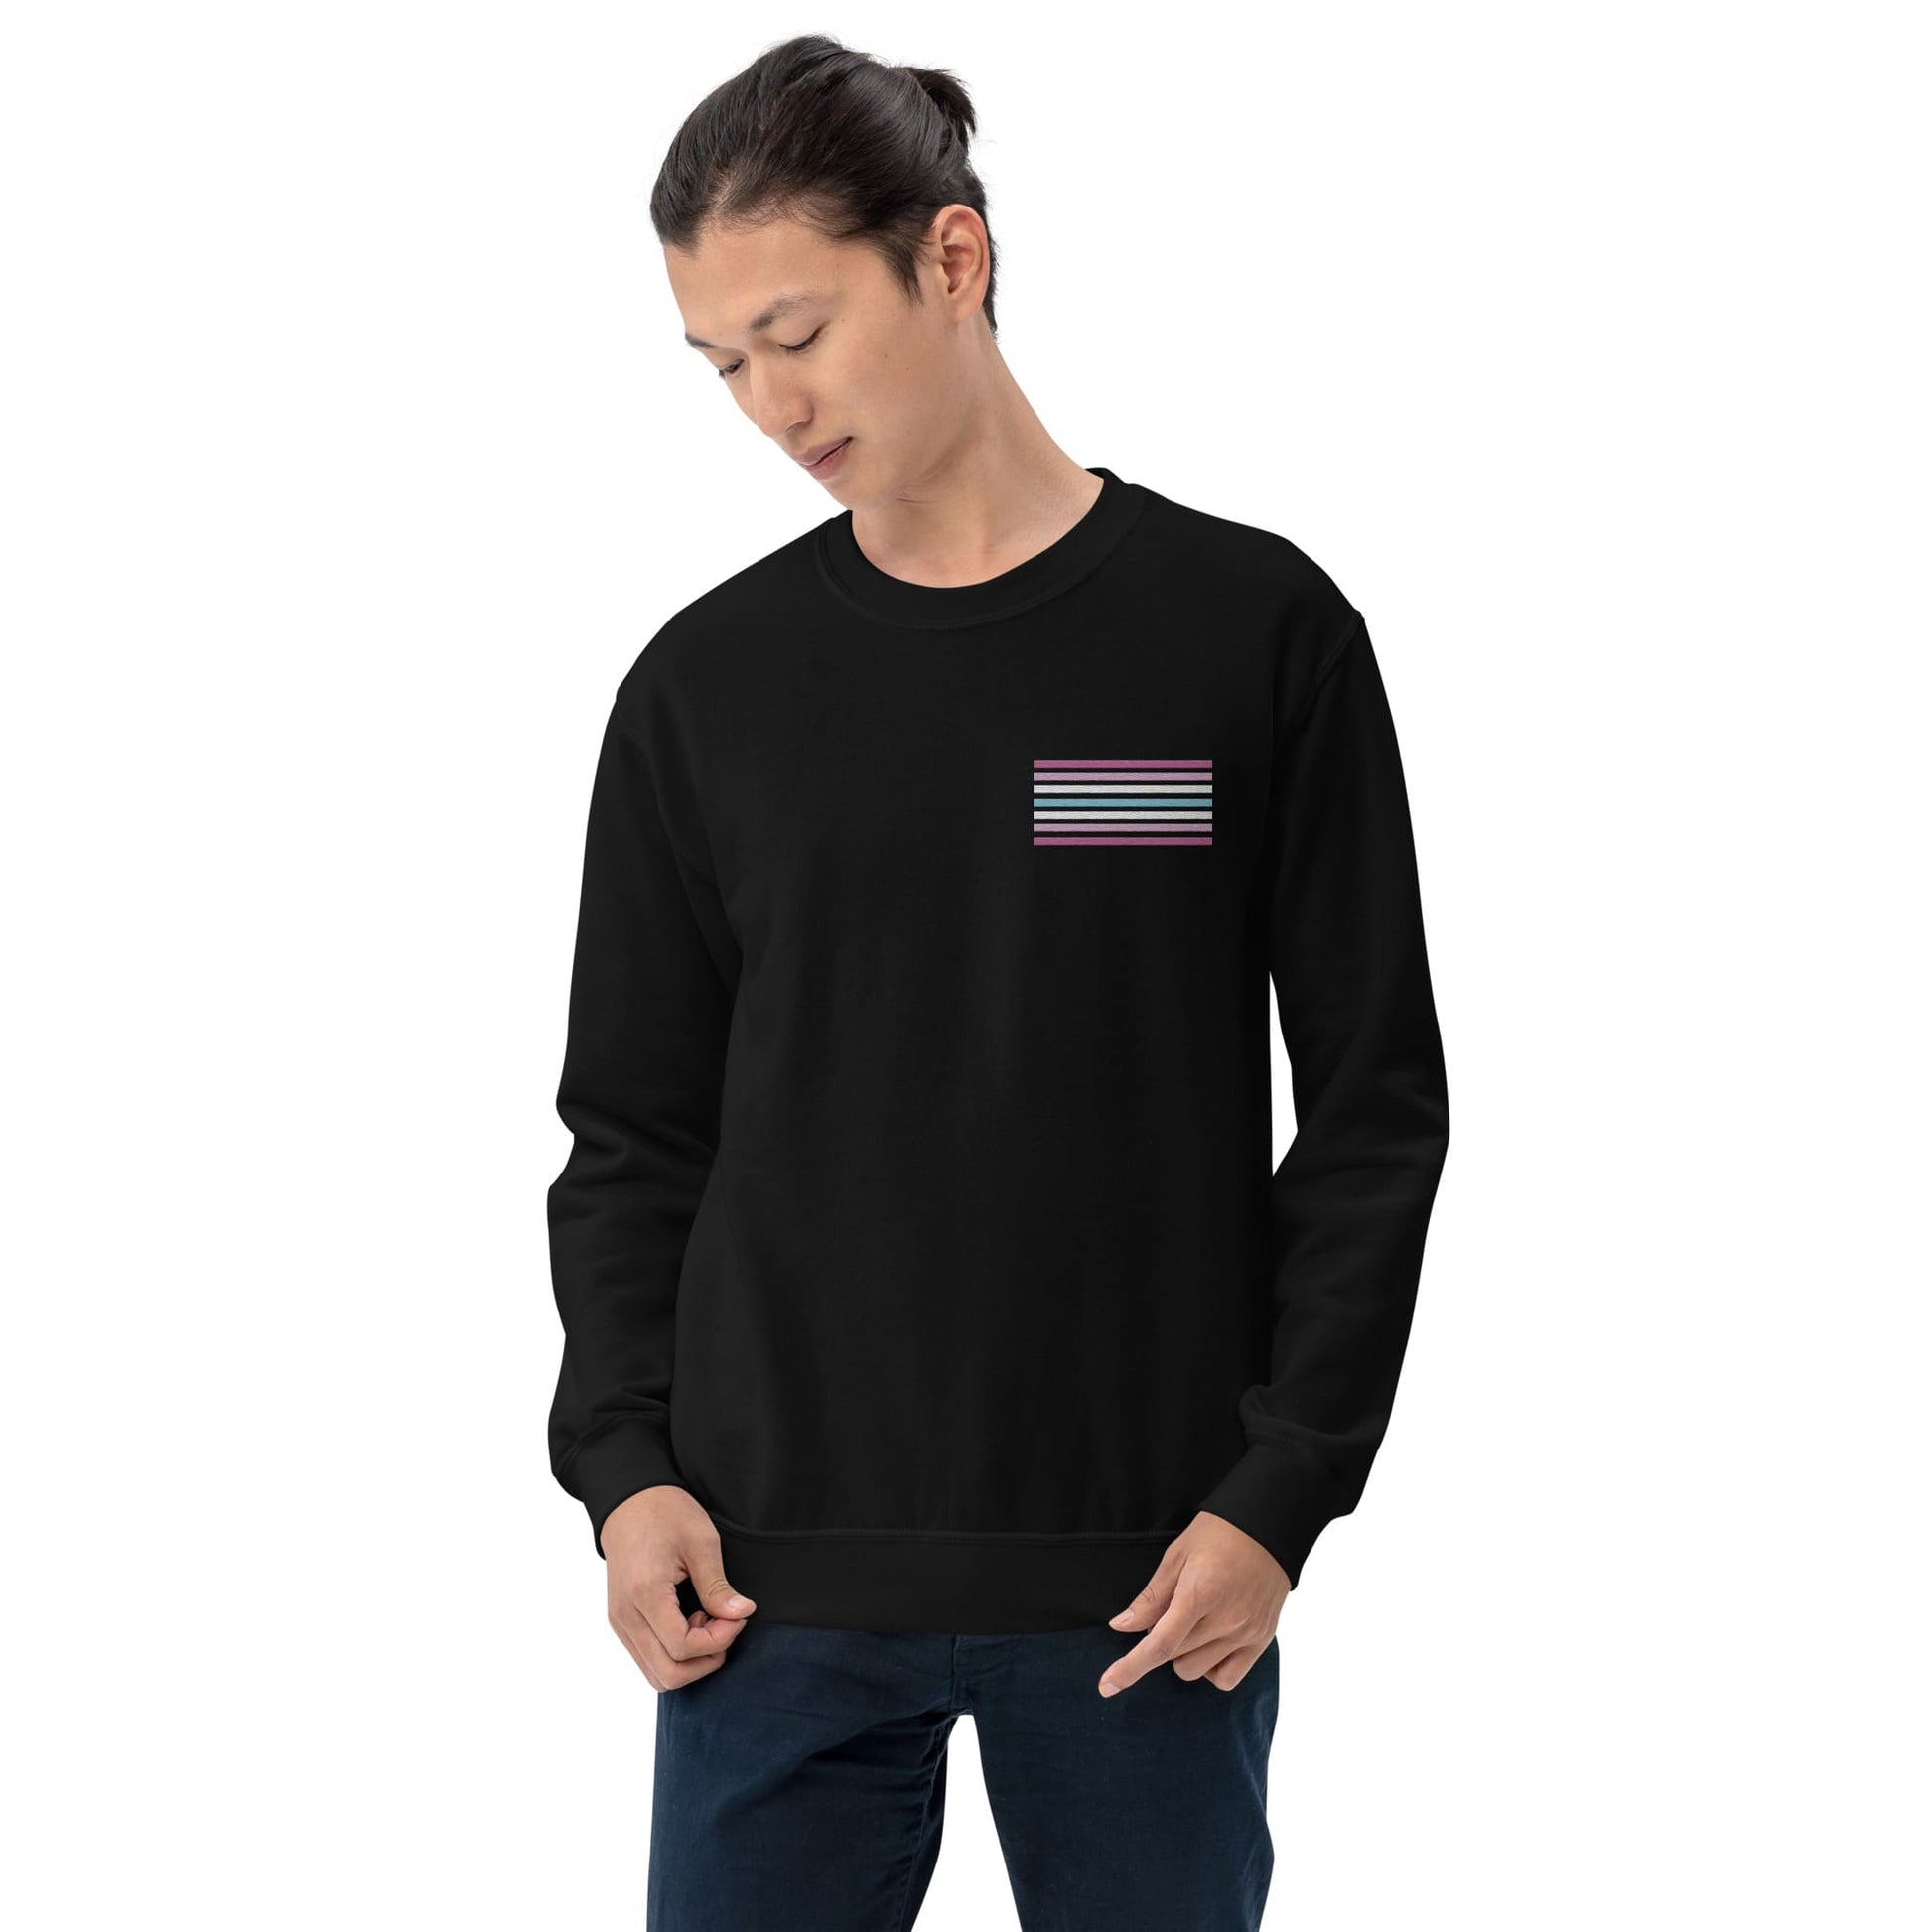 femboy sweatshirt, subtle femboi pride flag embroidered pocket design sweater, model 1